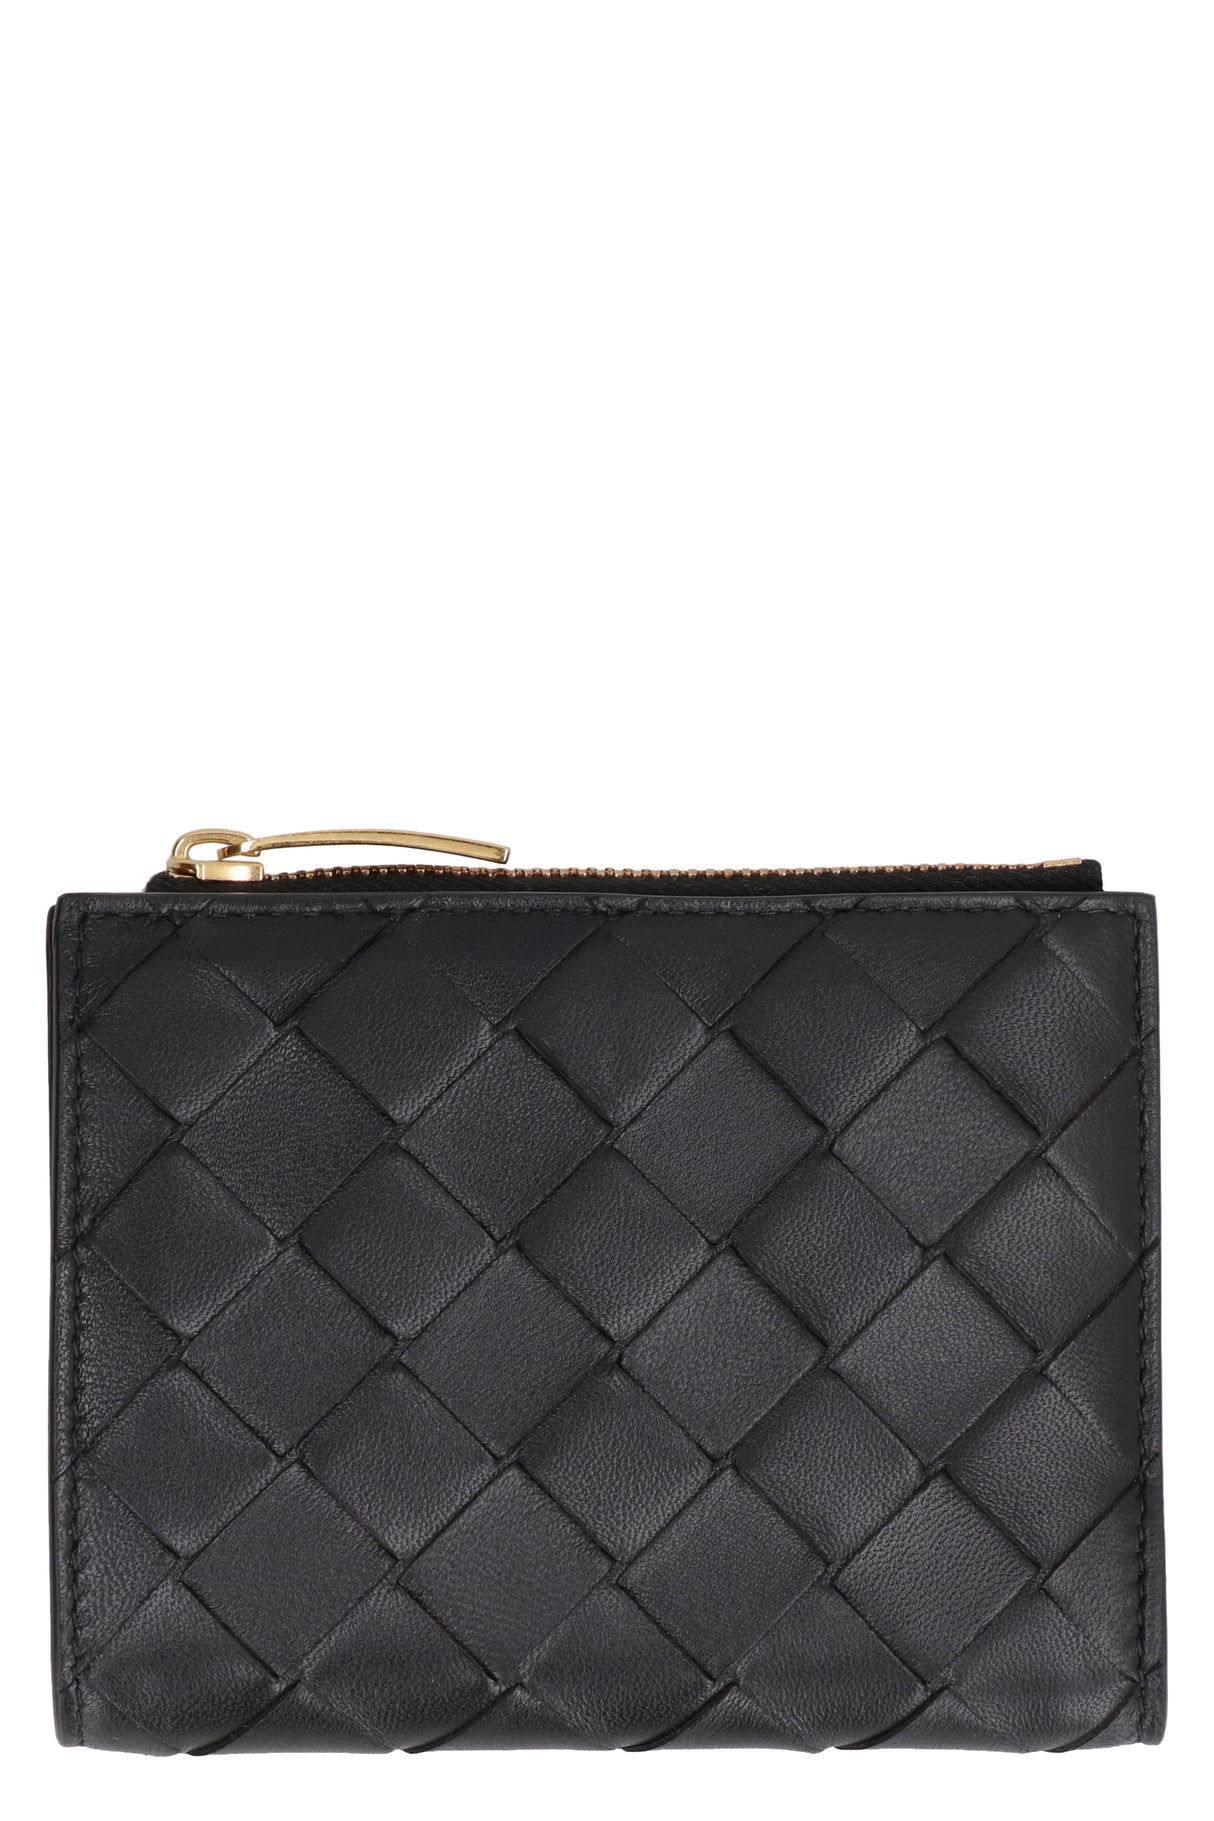 BOTTEGA VENETA Classic Black Leather Wallet with Intrecciato Motif and Multiple Compartments for Women